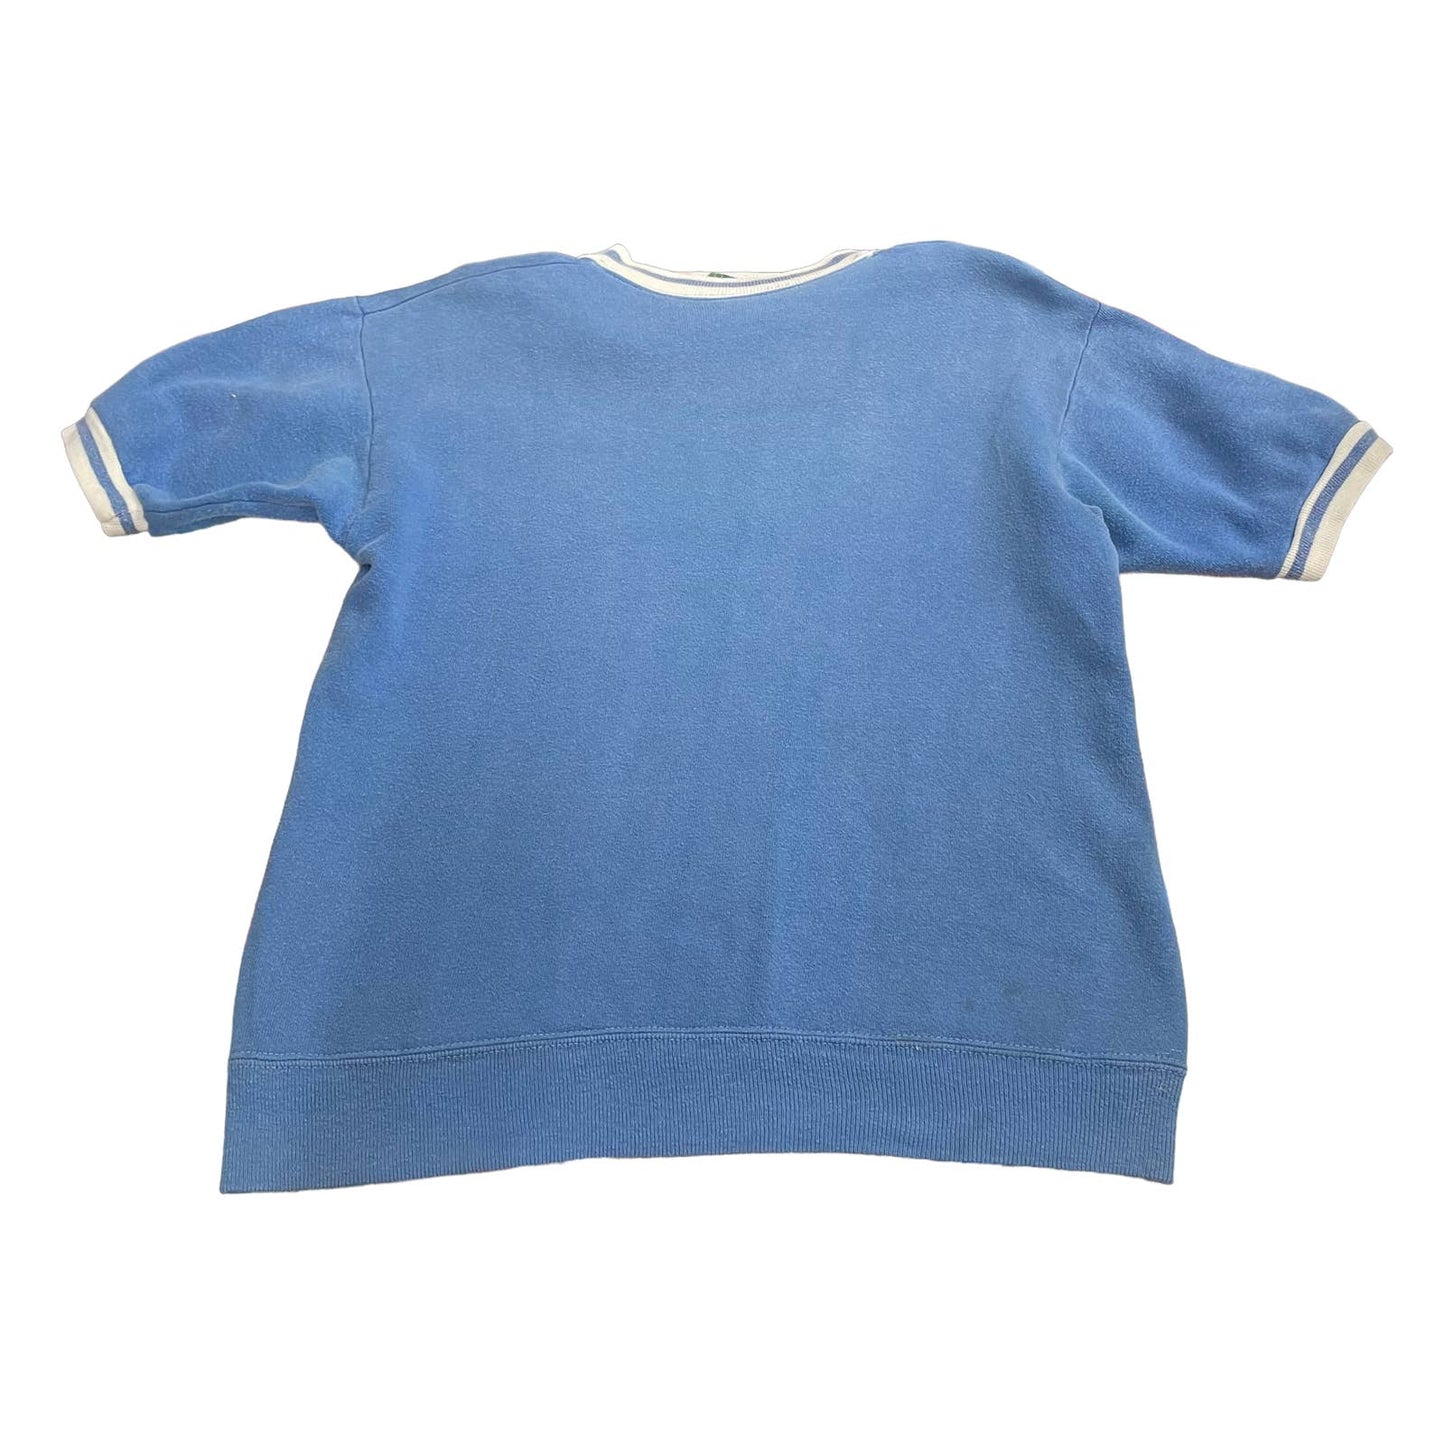 60s 70s Atwell Texas Dallas school v-neck short sleeve sweatshirt / small medium